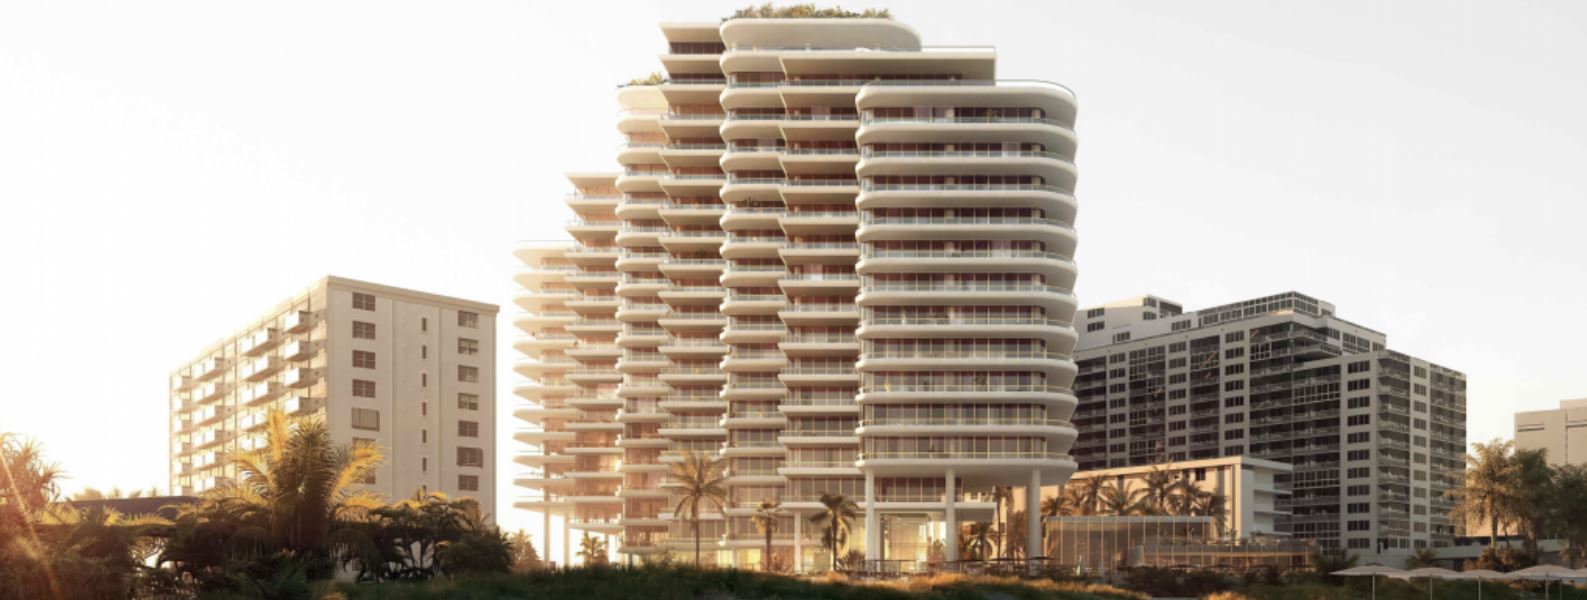 TOP Luxury Buildings in Miami